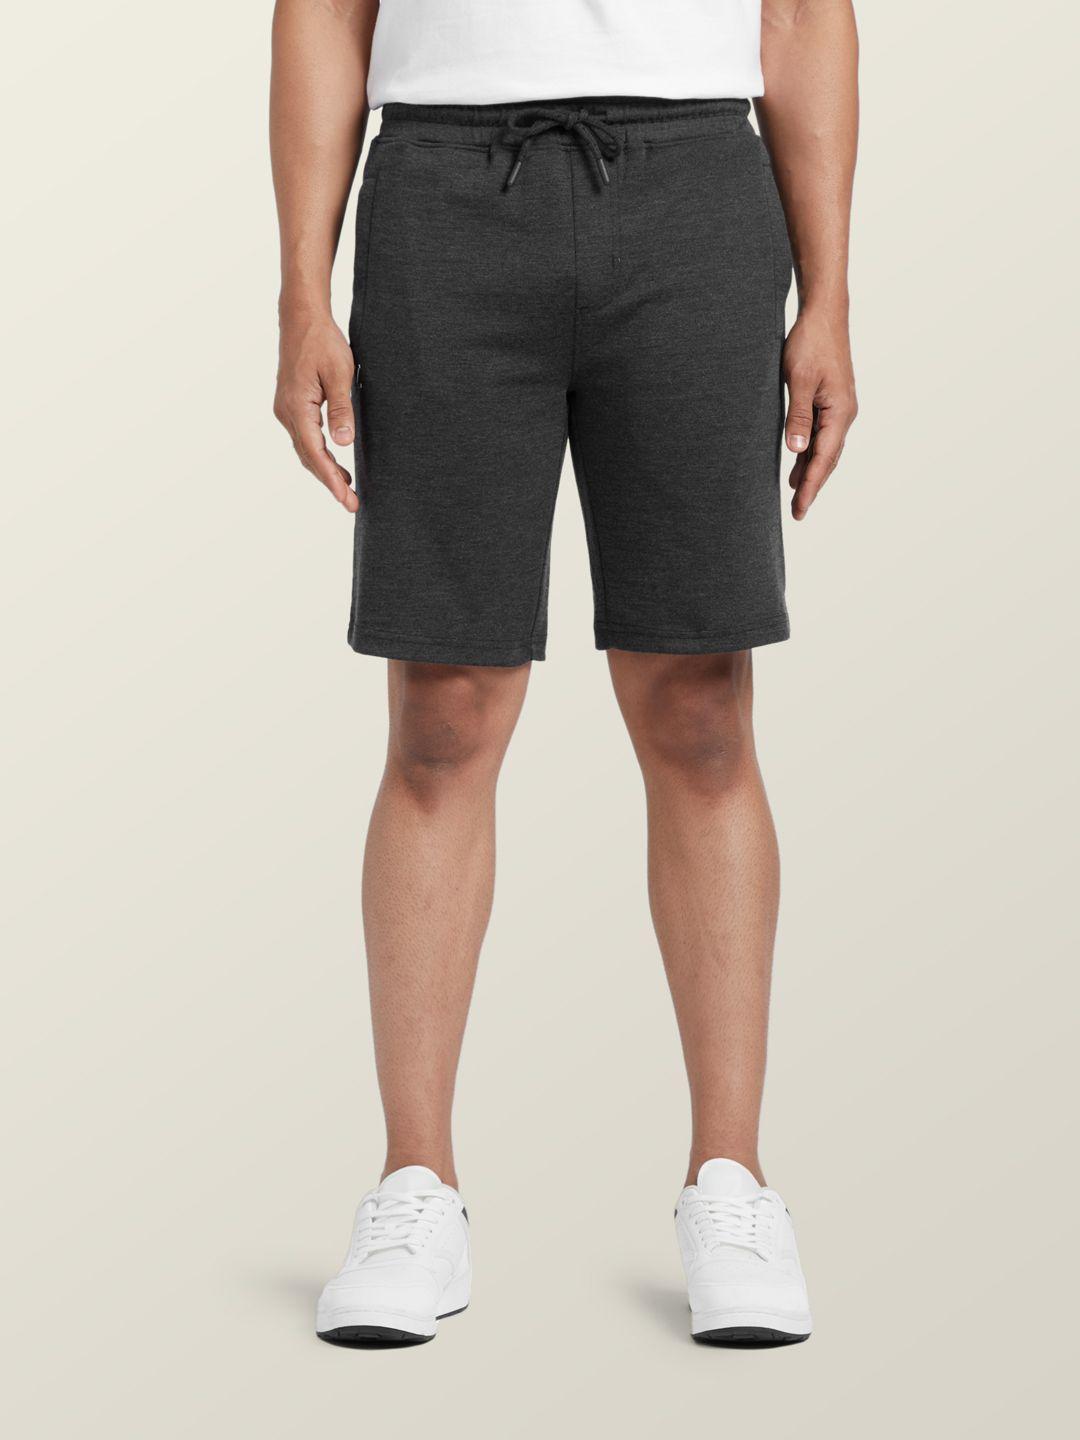 xyxx men grey outdoor sports shorts